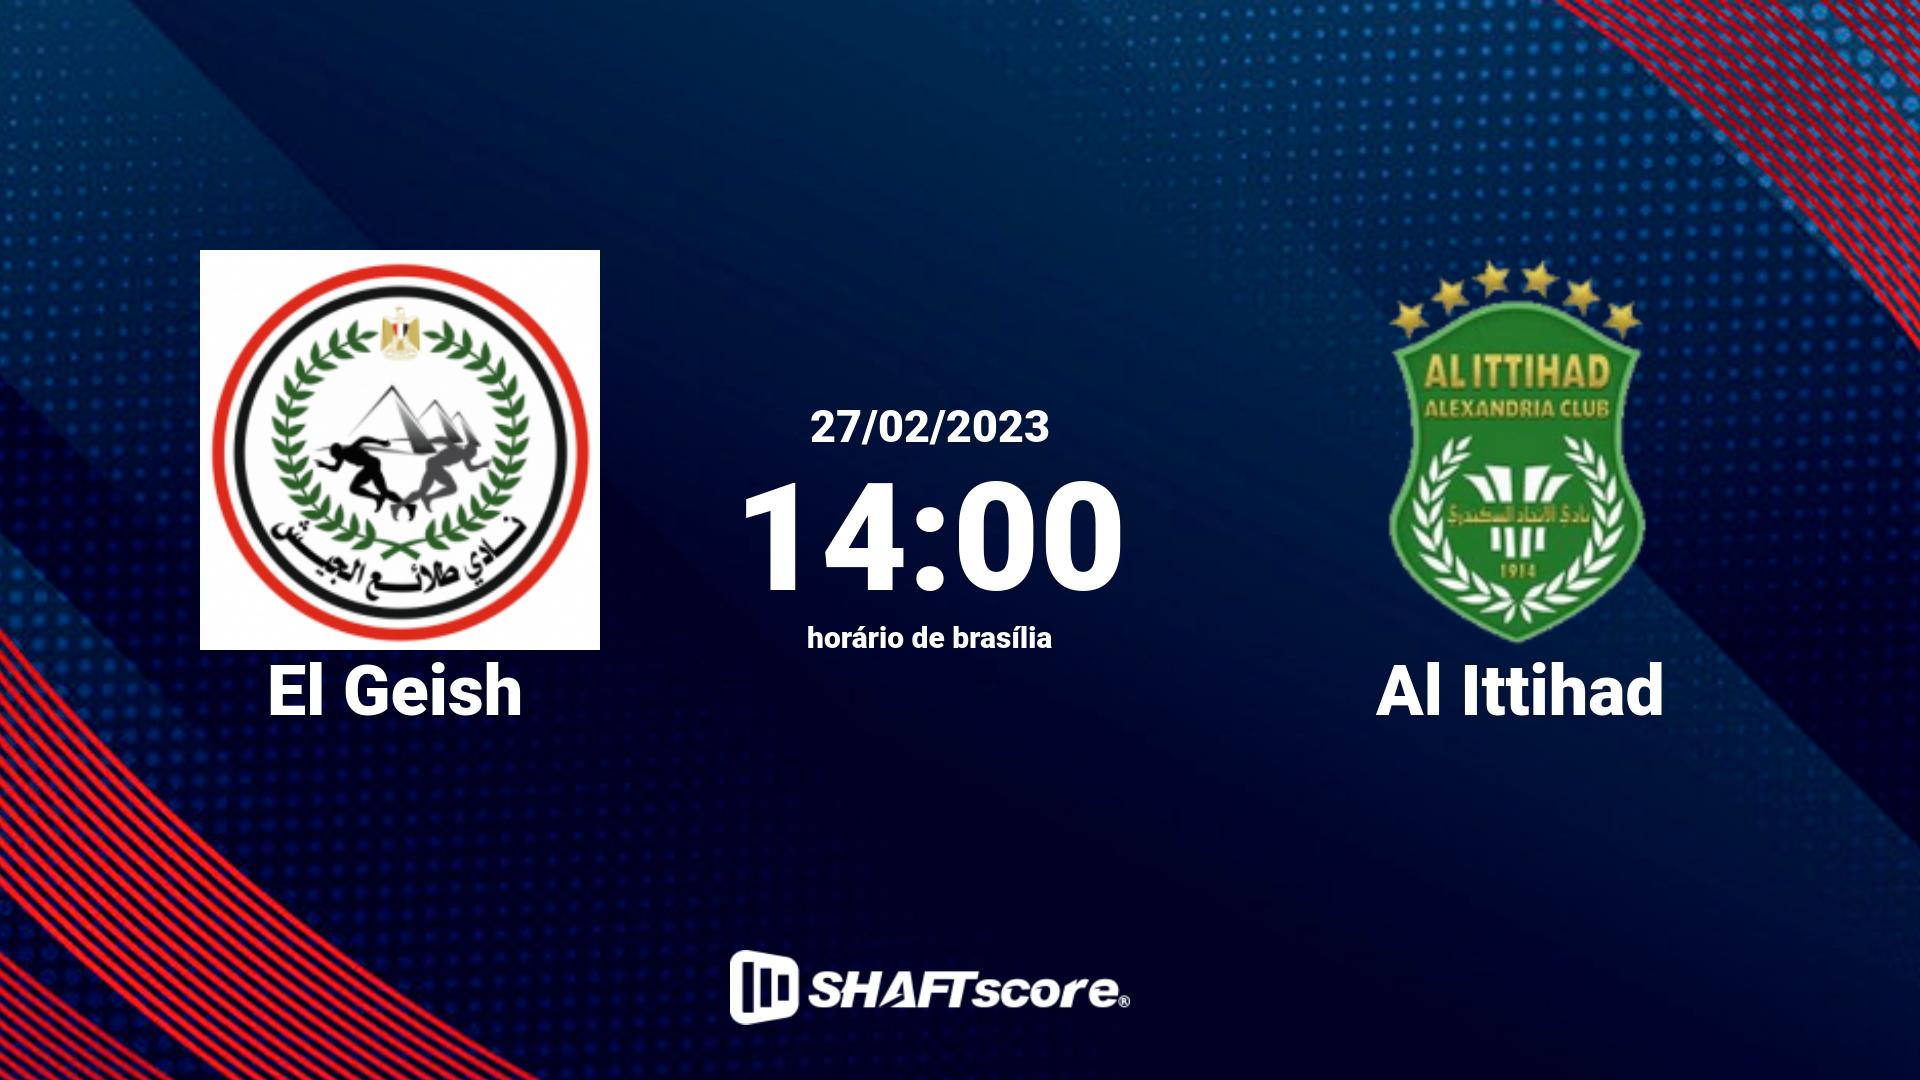 Estatísticas do jogo El Geish vs Al Ittihad 27.02 14:00